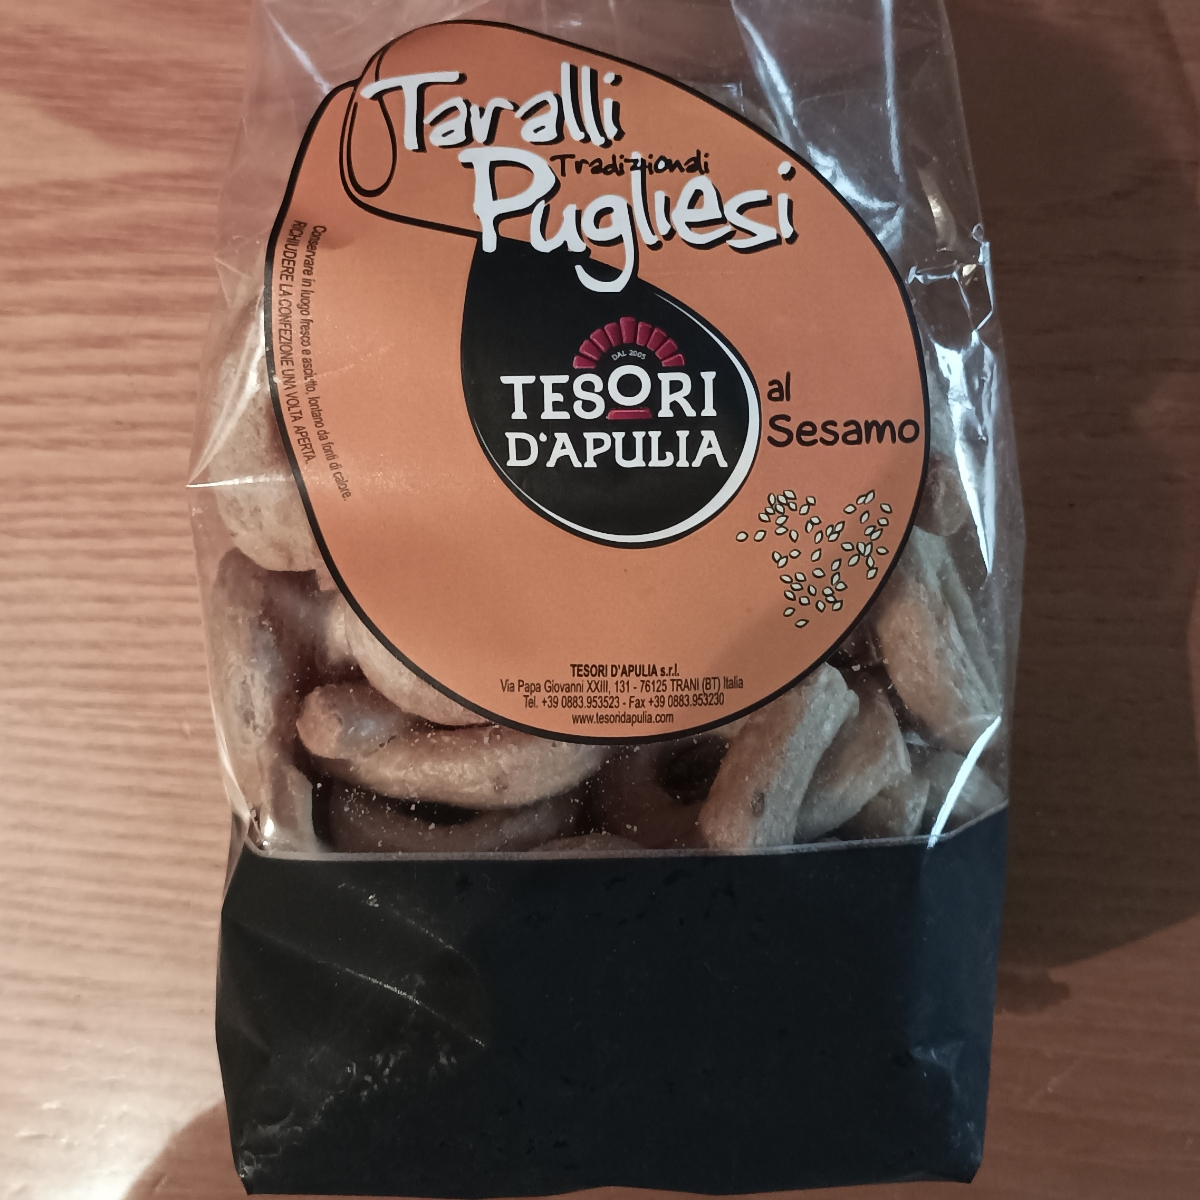 Taralli tradizionali pugliesi gusto pizza - Tesori d'Apulia